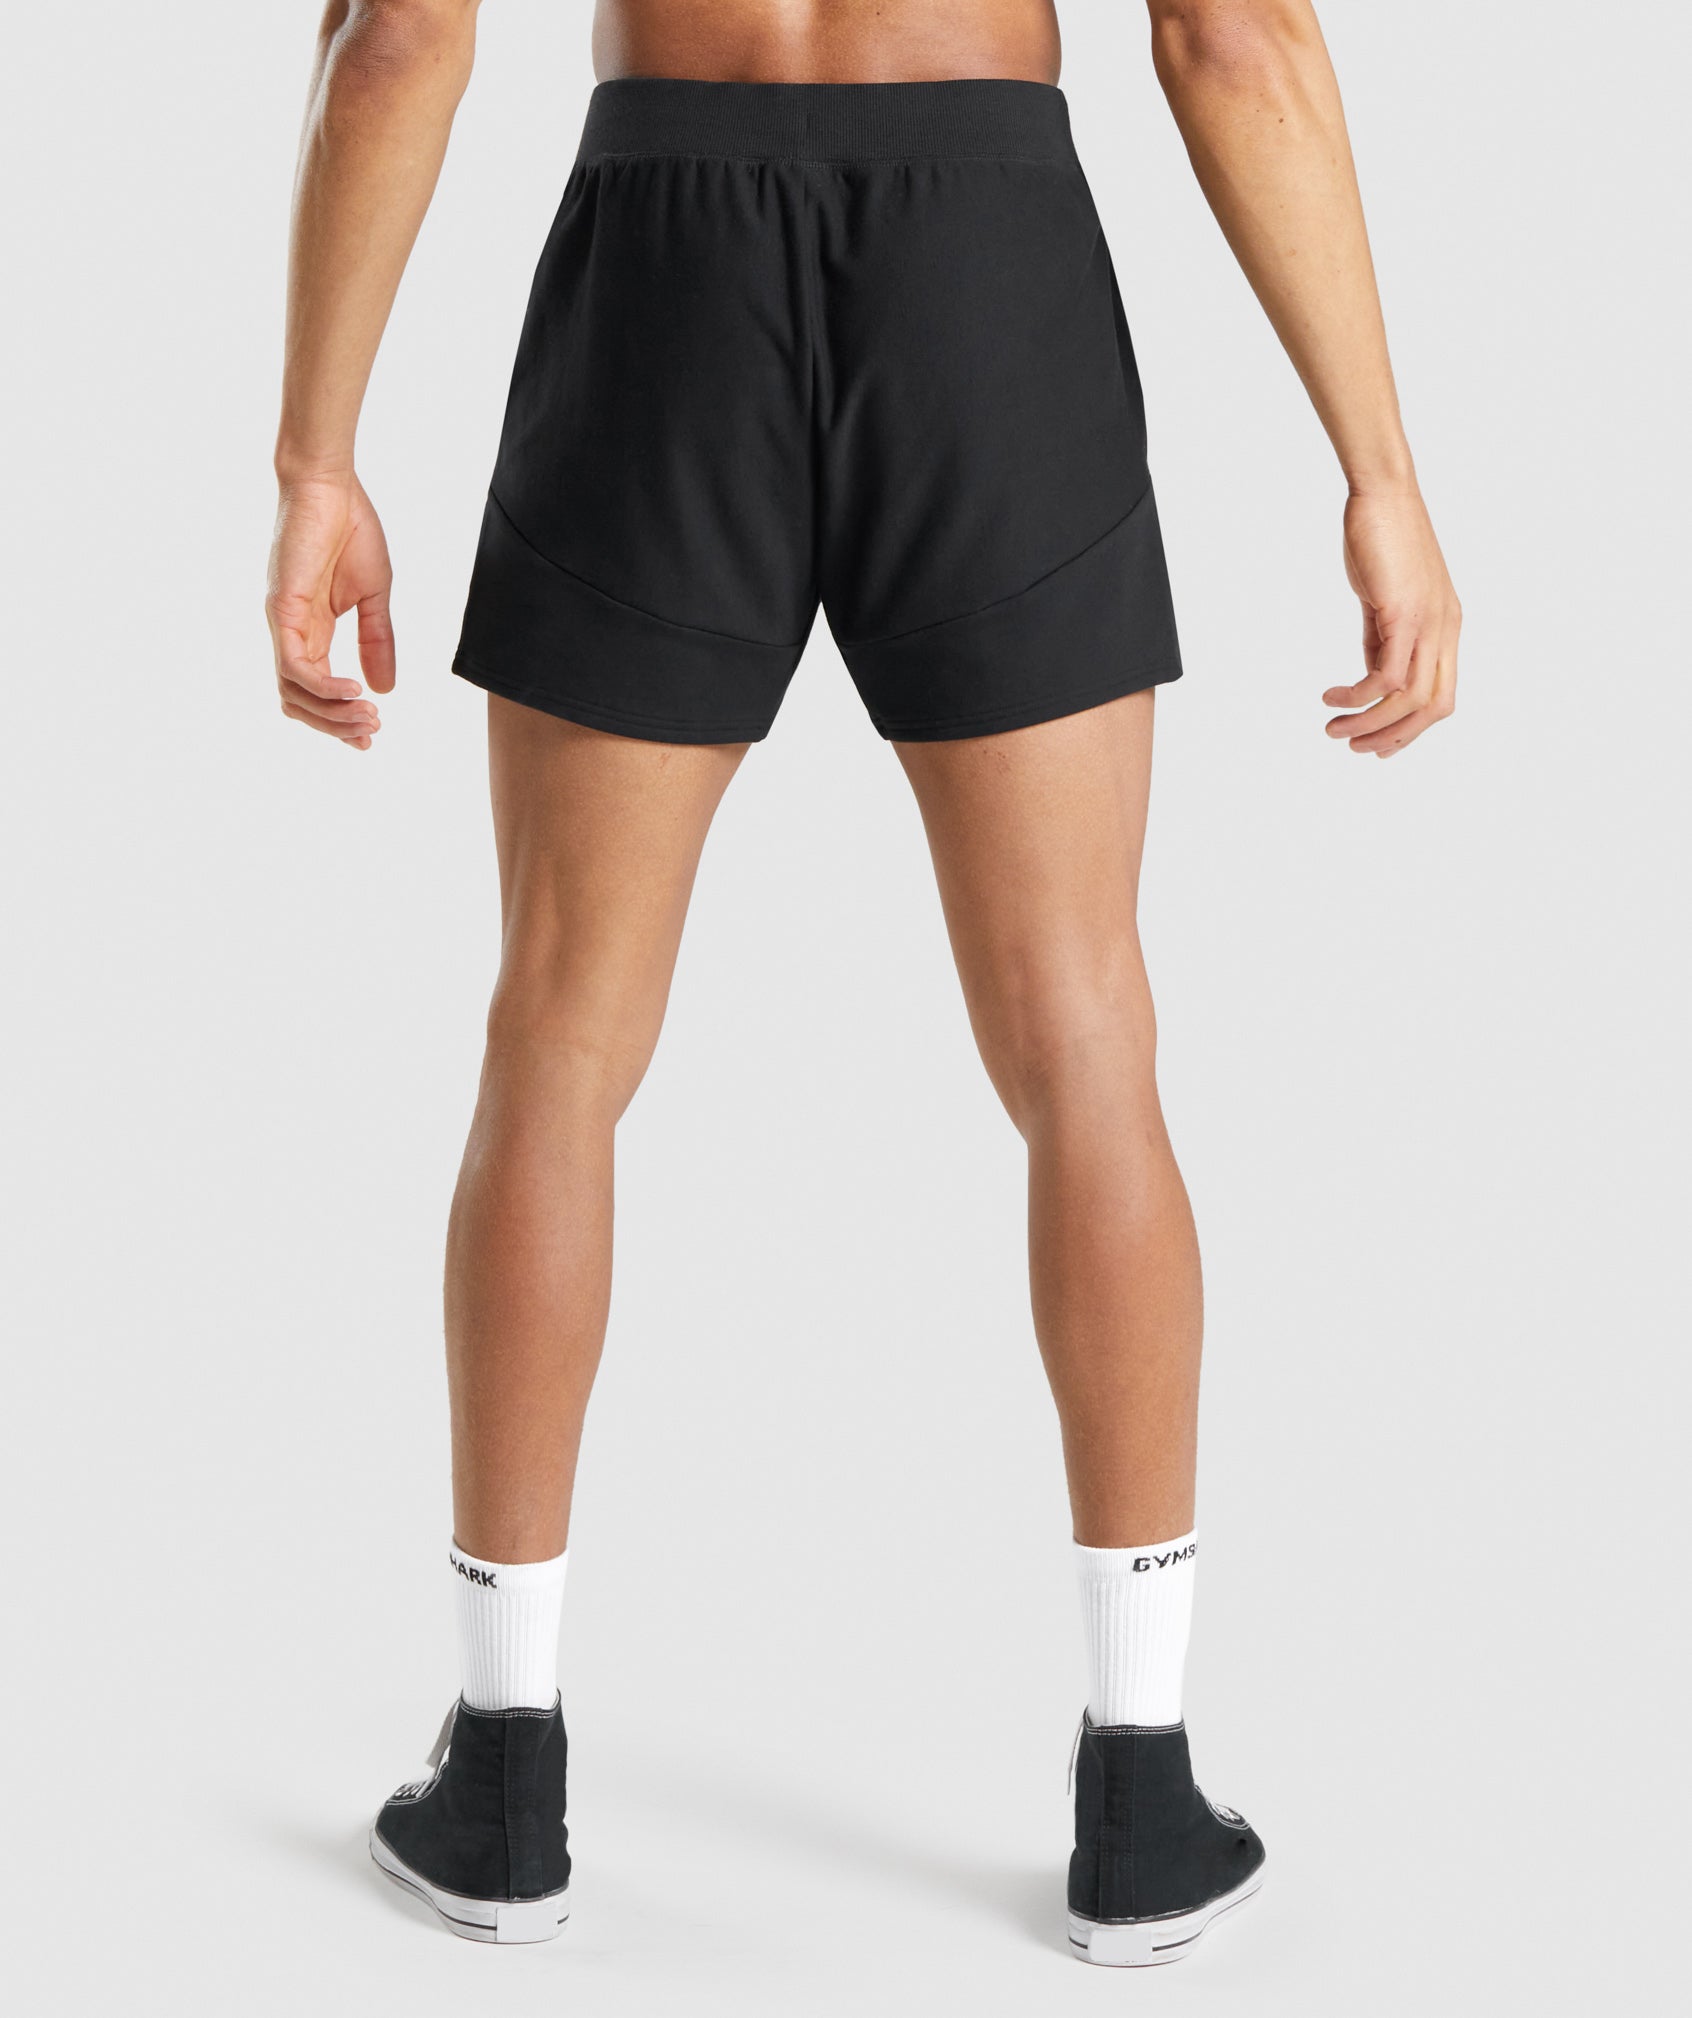 Chalk 5" Quad Shorts